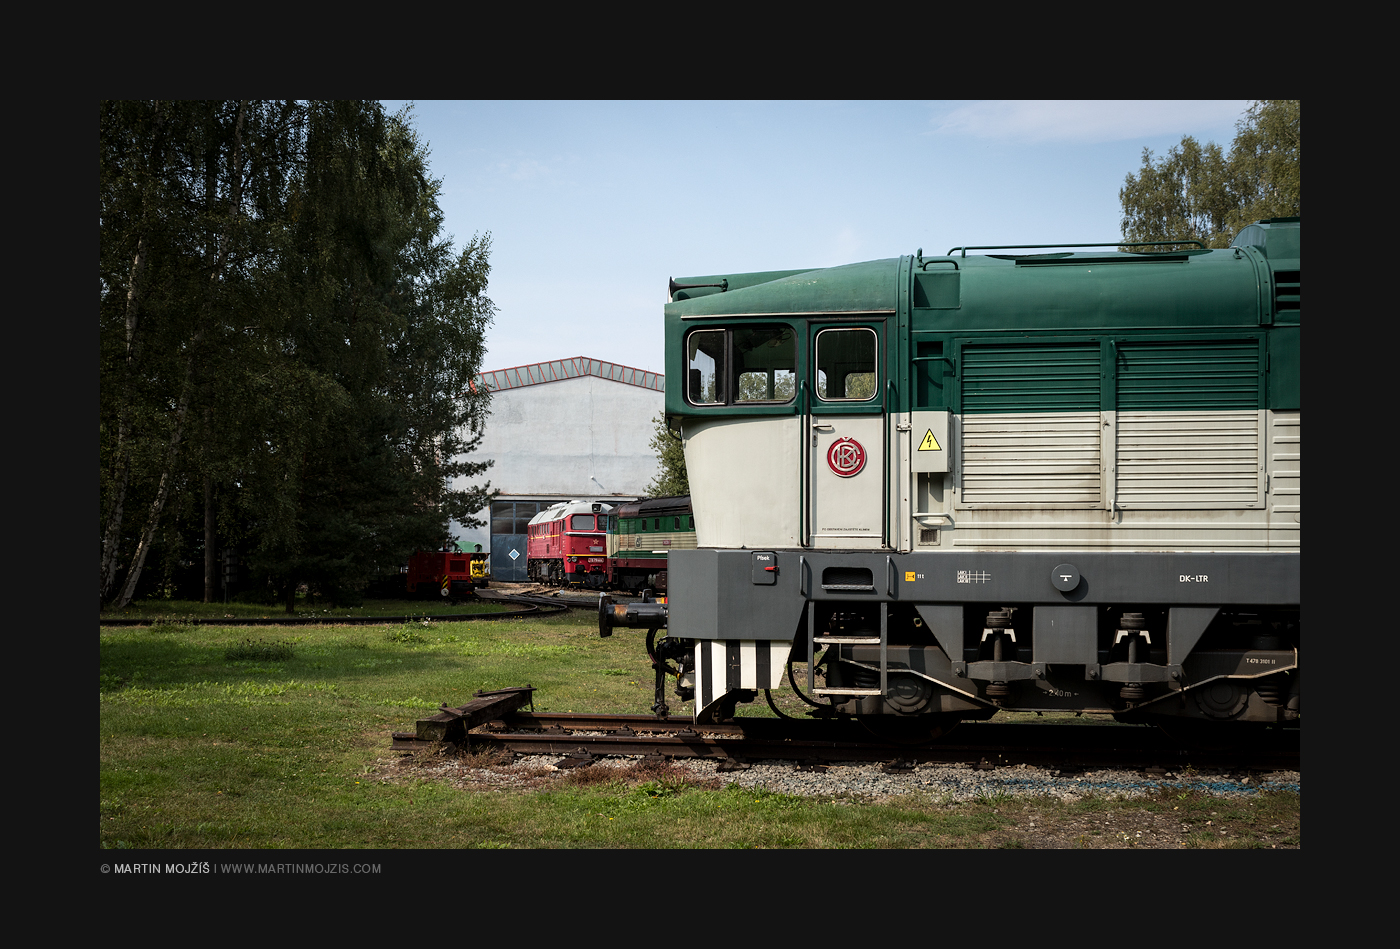 The front part of the locomotive called Brejlovec in the Railway Museum in Luzna near Rakovnik. Railway muzeum in Luzna near Rakovnik.